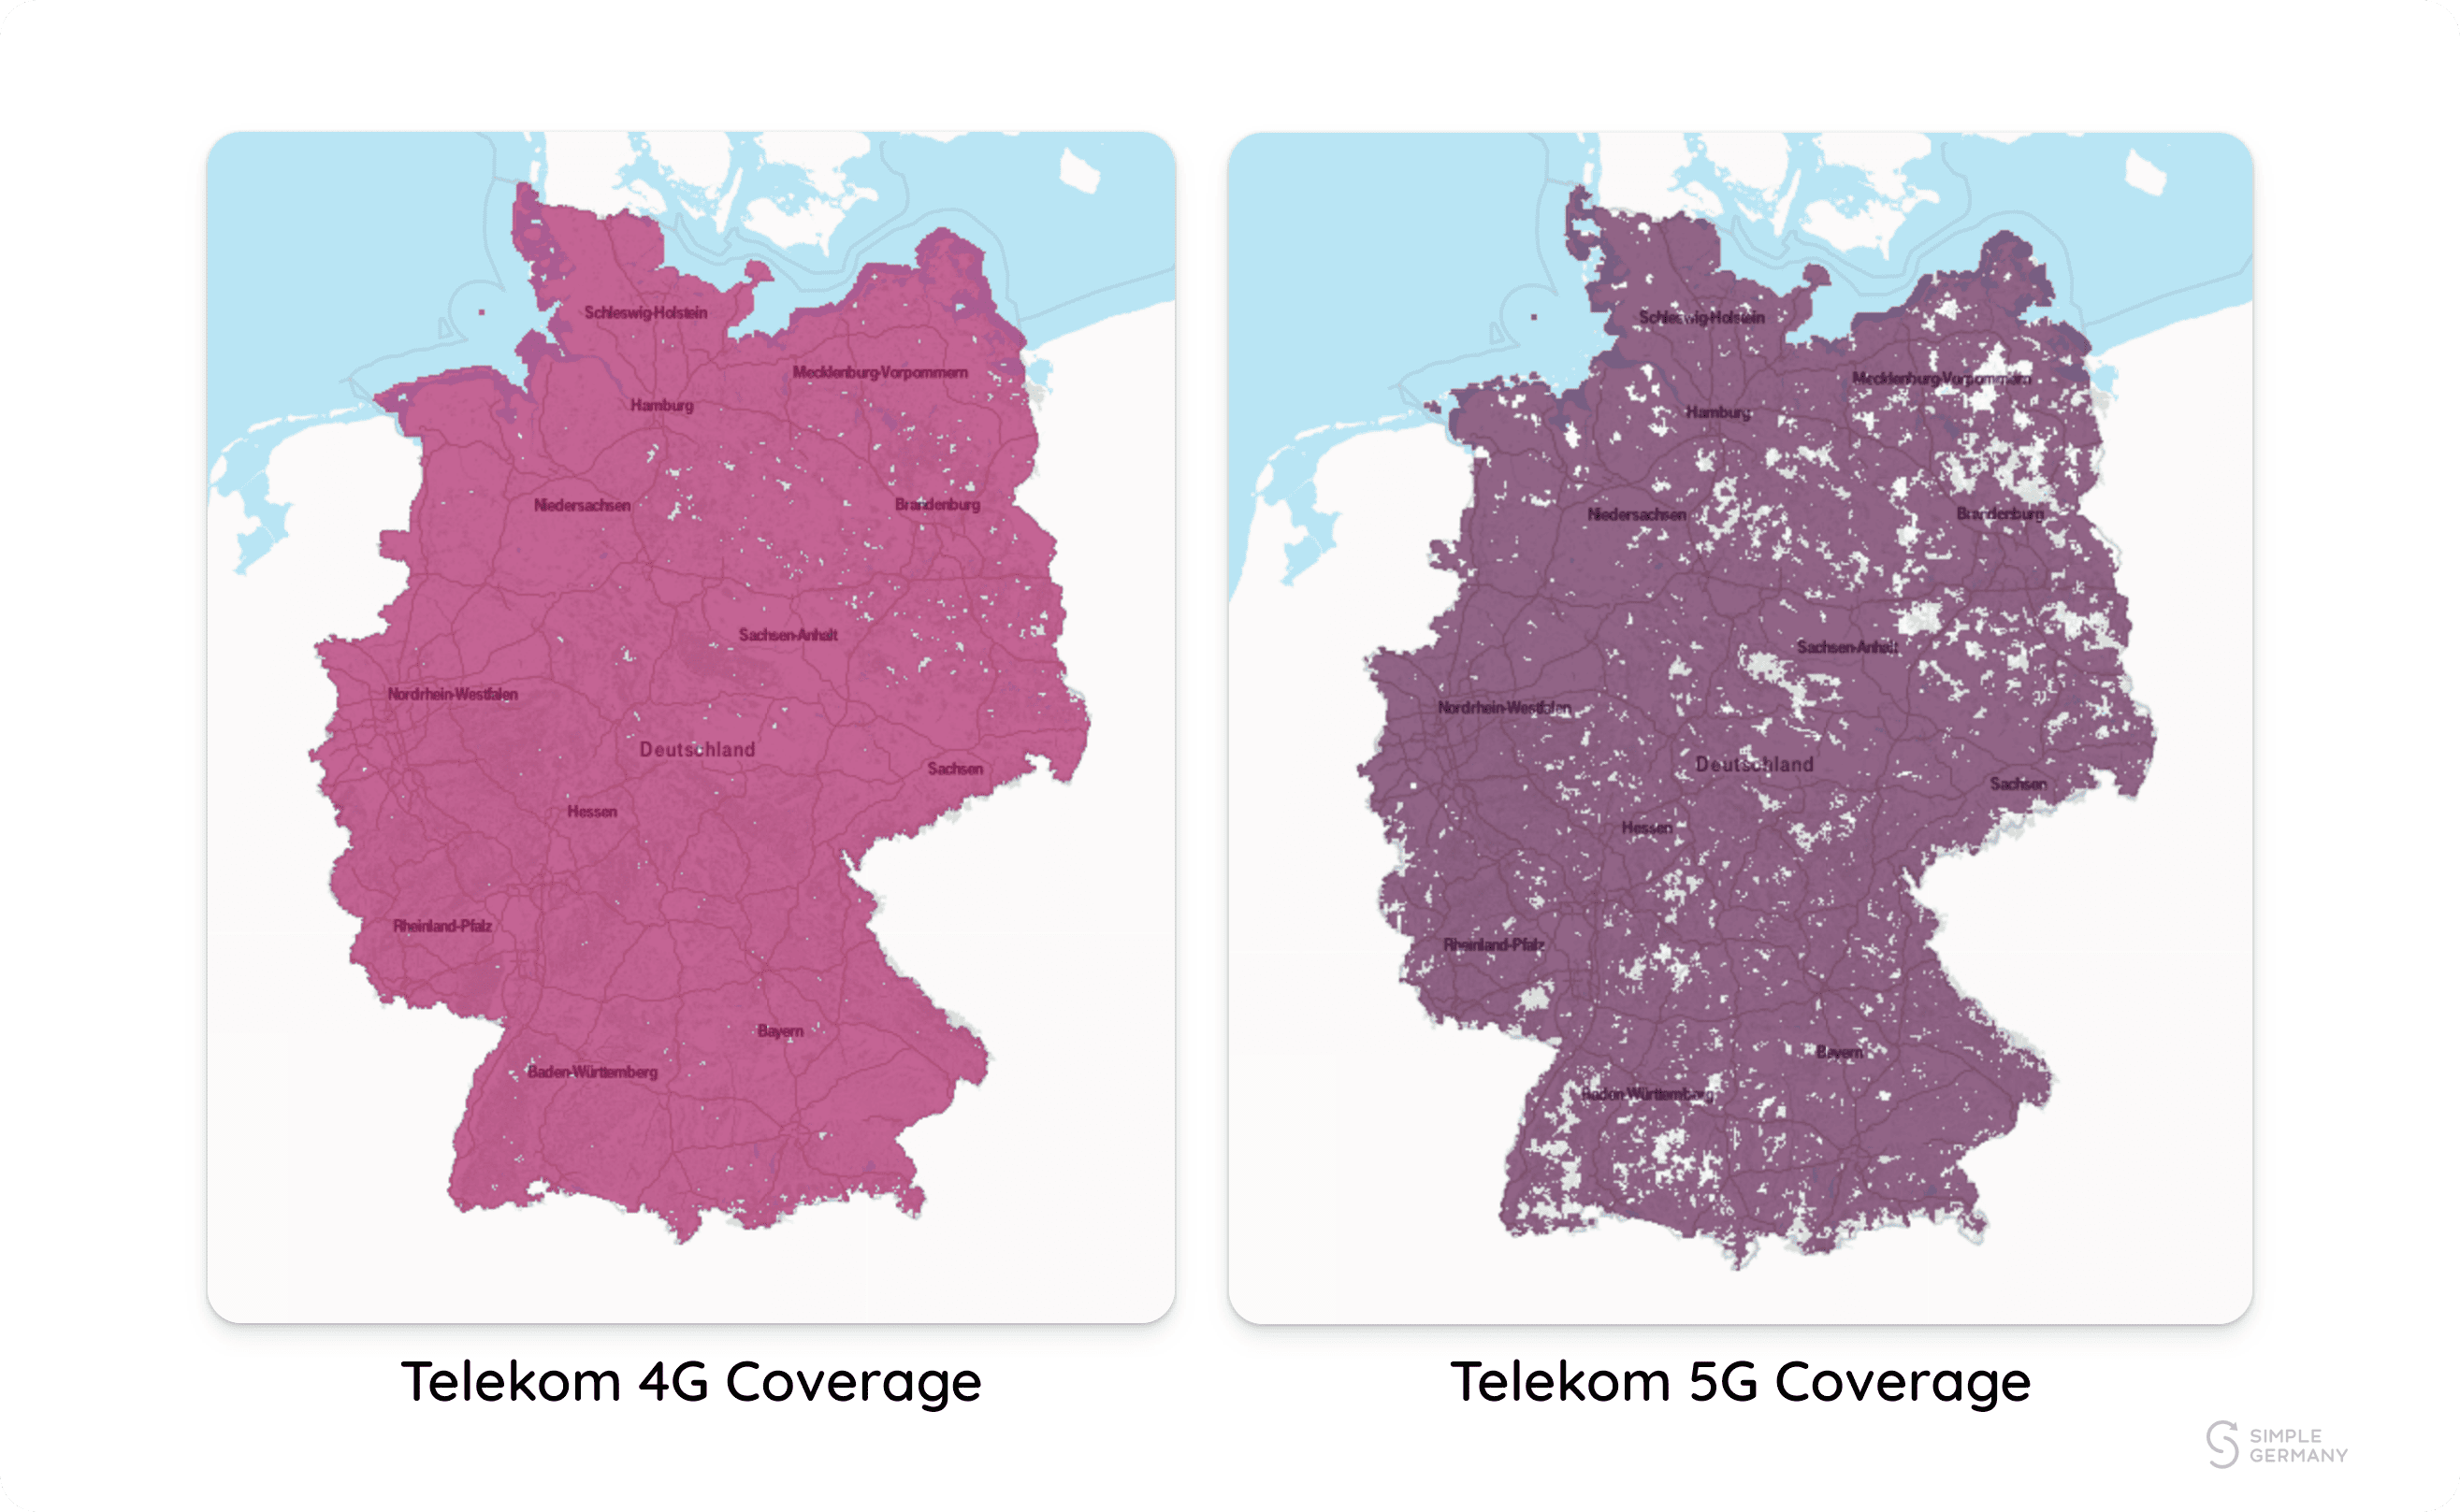 Telekom mobile coverage in Germany